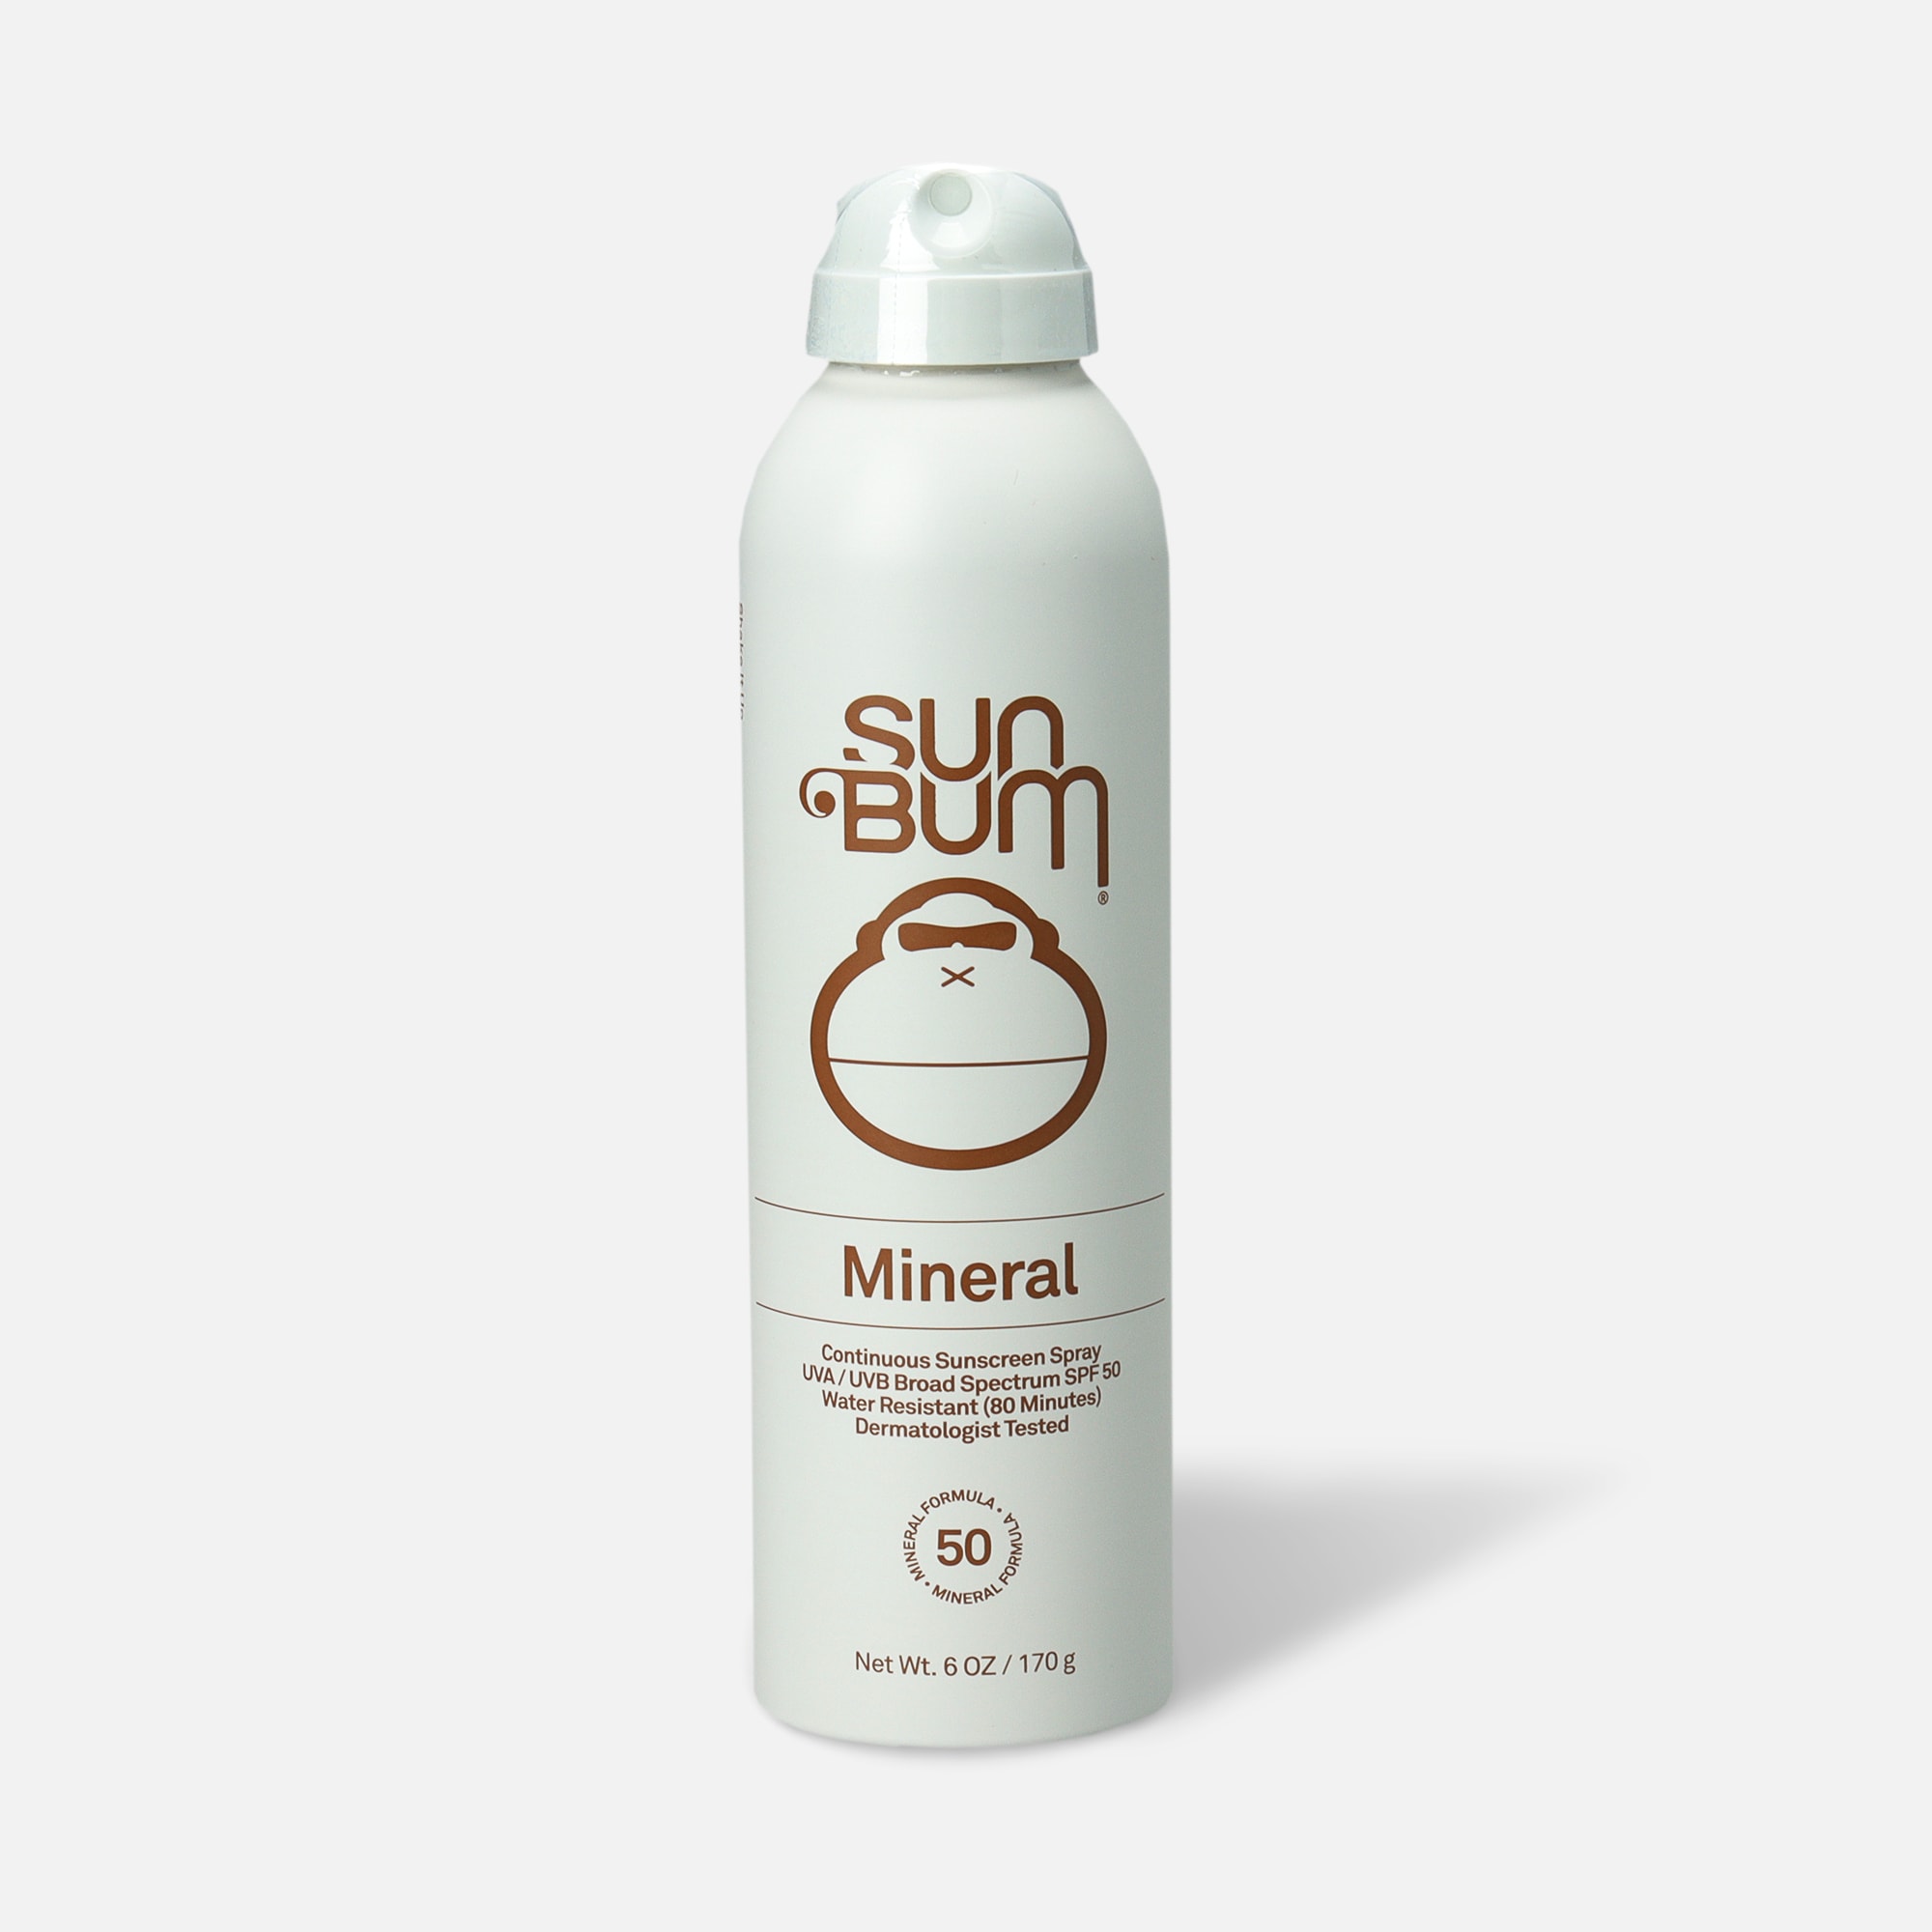 Sun Bum Sunscreen Spray, Mineral, SPF 50 - 6 oz